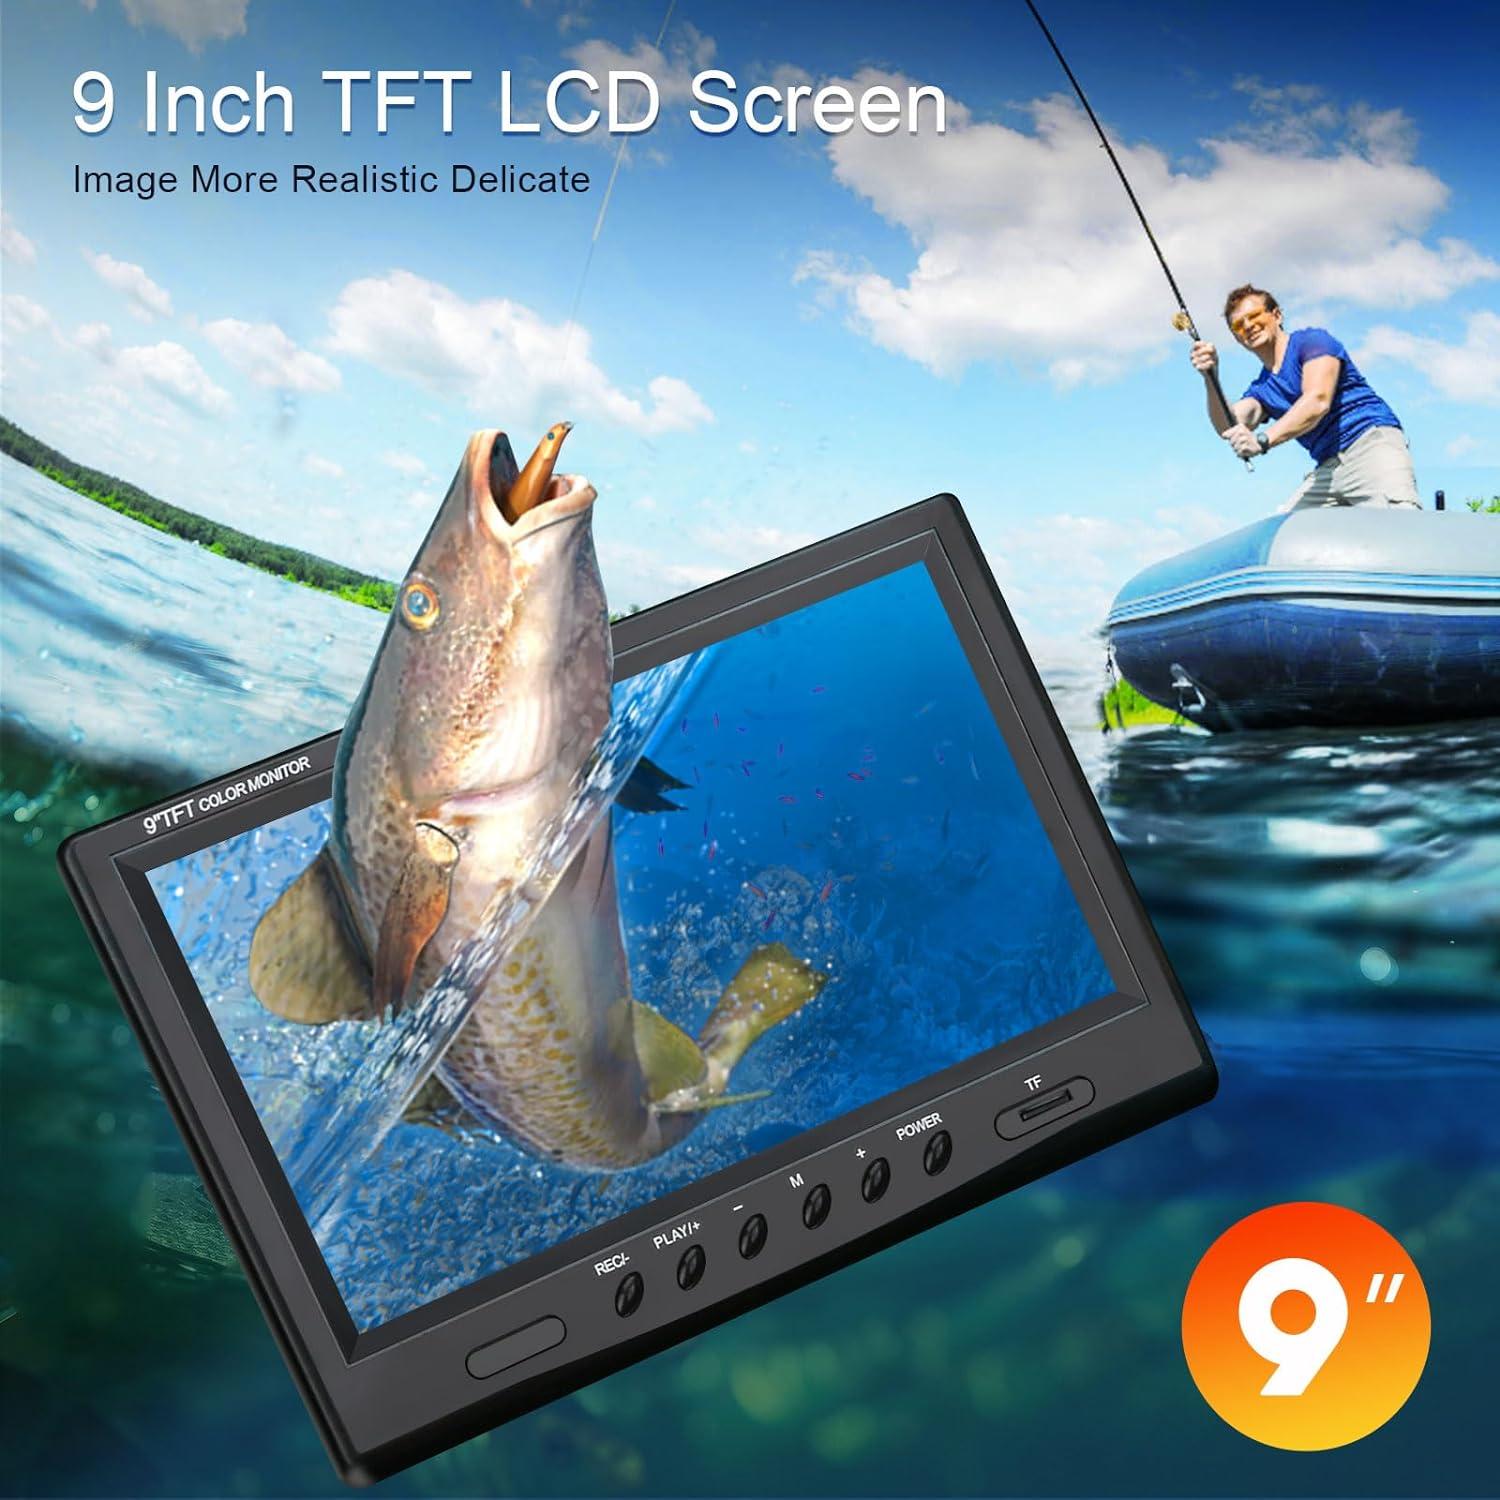 ESANHAO Underwater Viewer Fishing Camera 9 inch LCD Monitor DVR